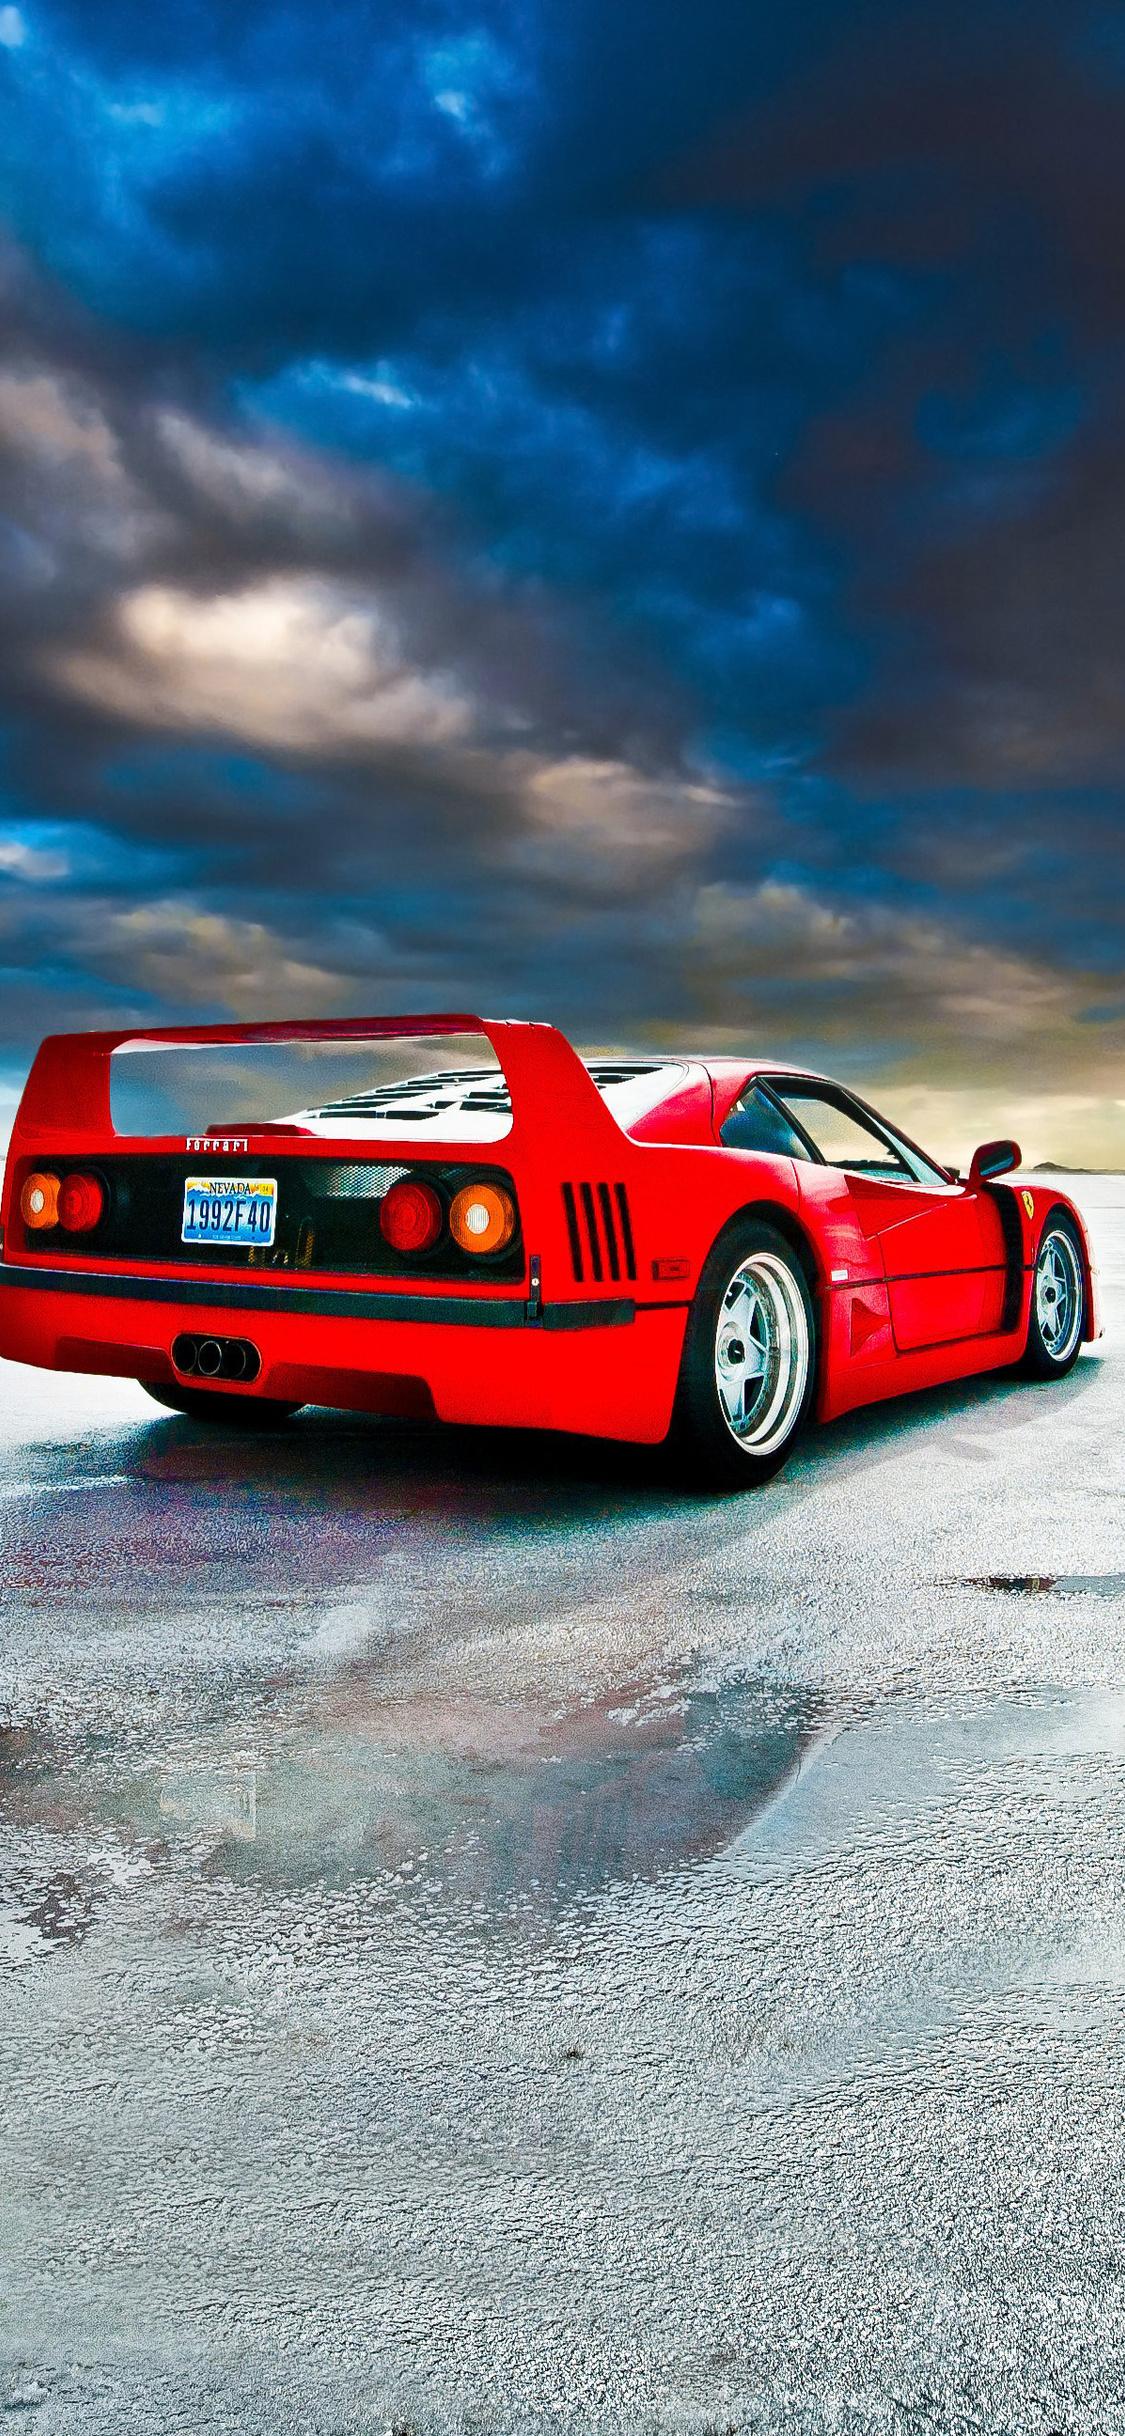 Ferrari iPhone X Wallpapers - Top Free Ferrari iPhone X Backgrounds ...